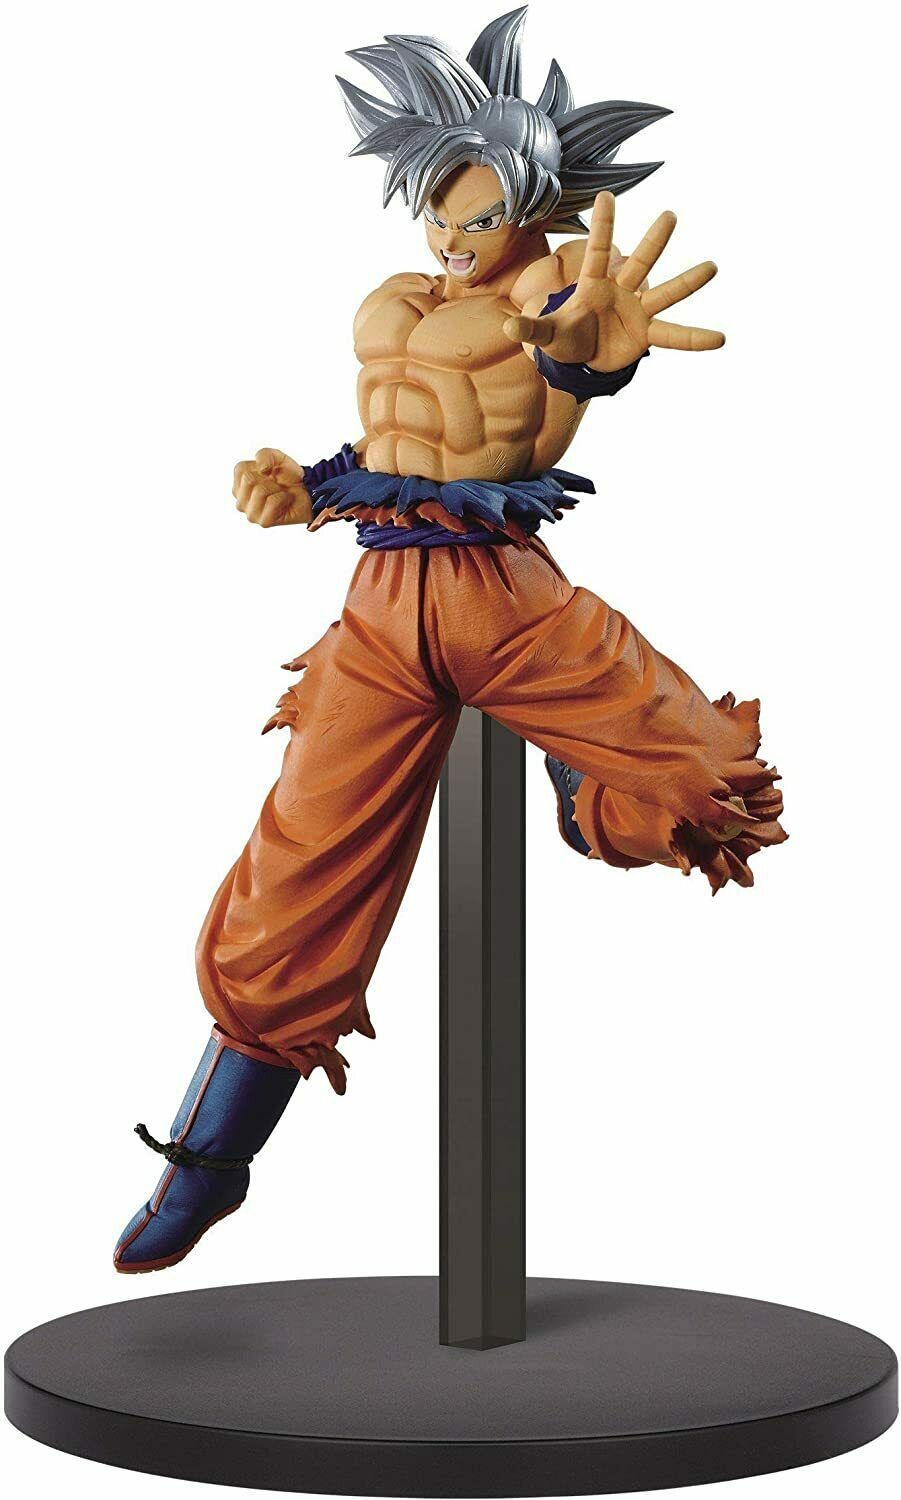 Son Goku Figure, The Ultimate Selfishness Figure, Dragon Ball Super, Banpresto